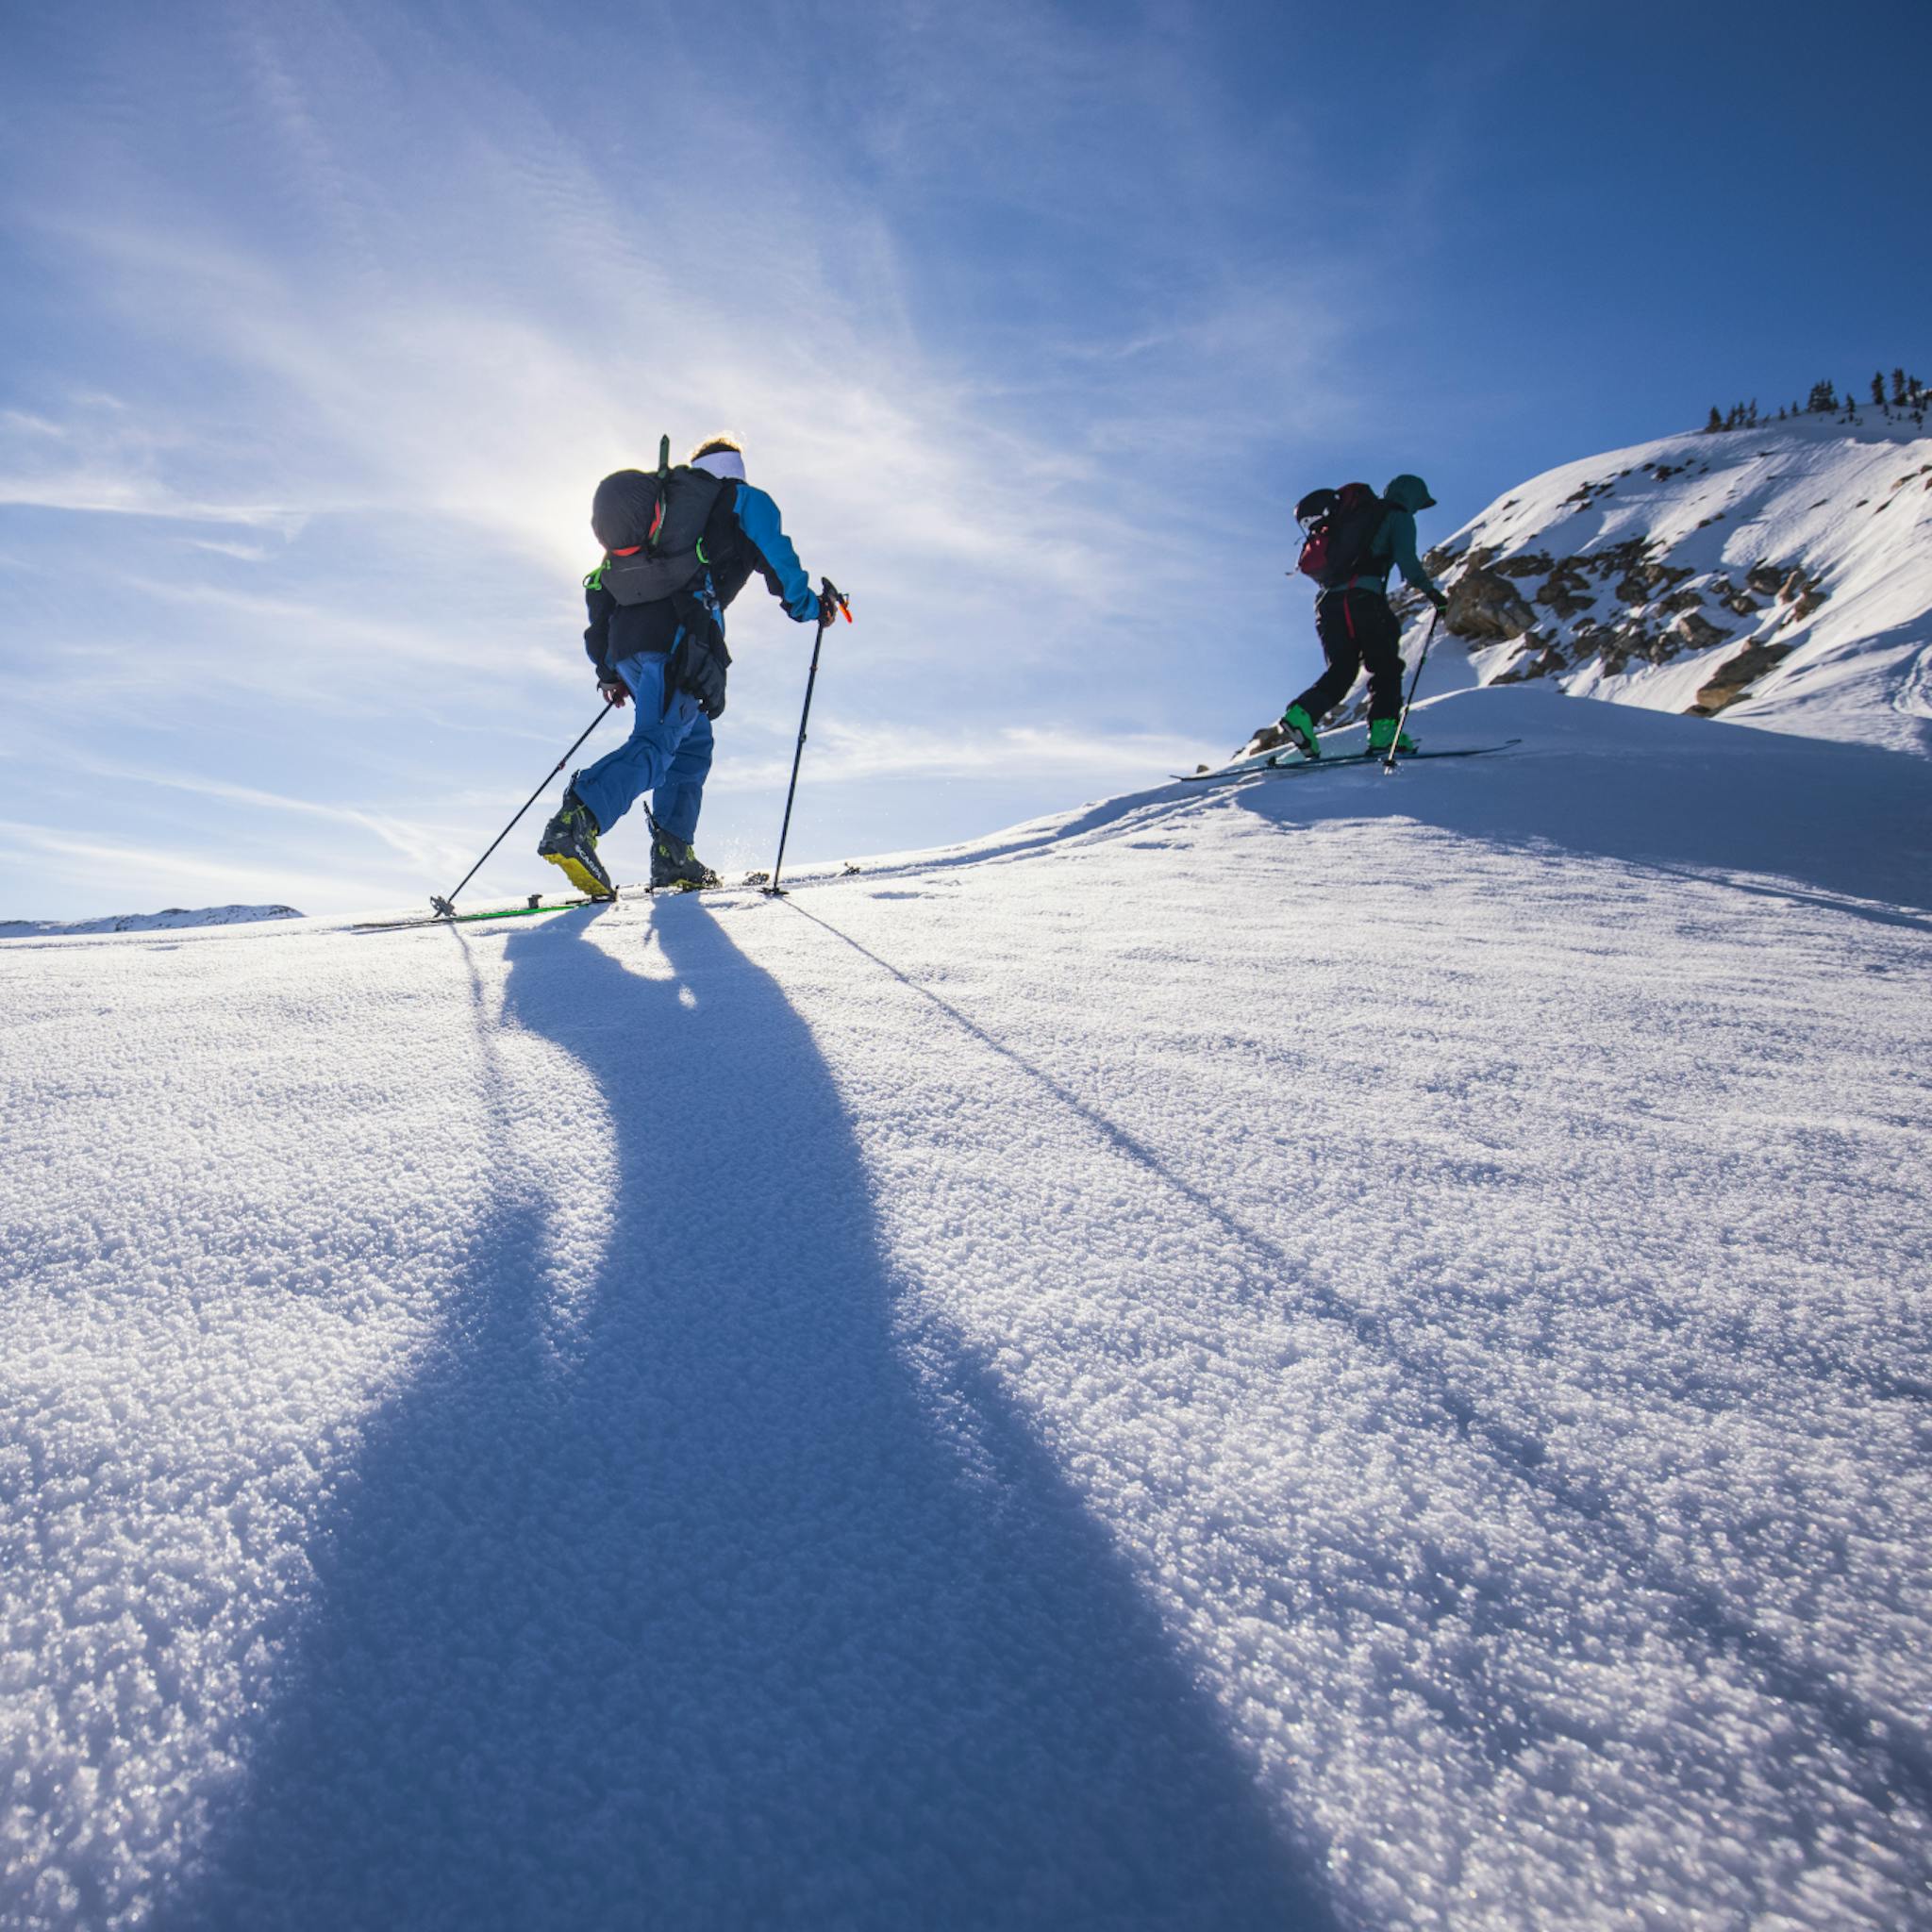 Skitourer with Traverse poles